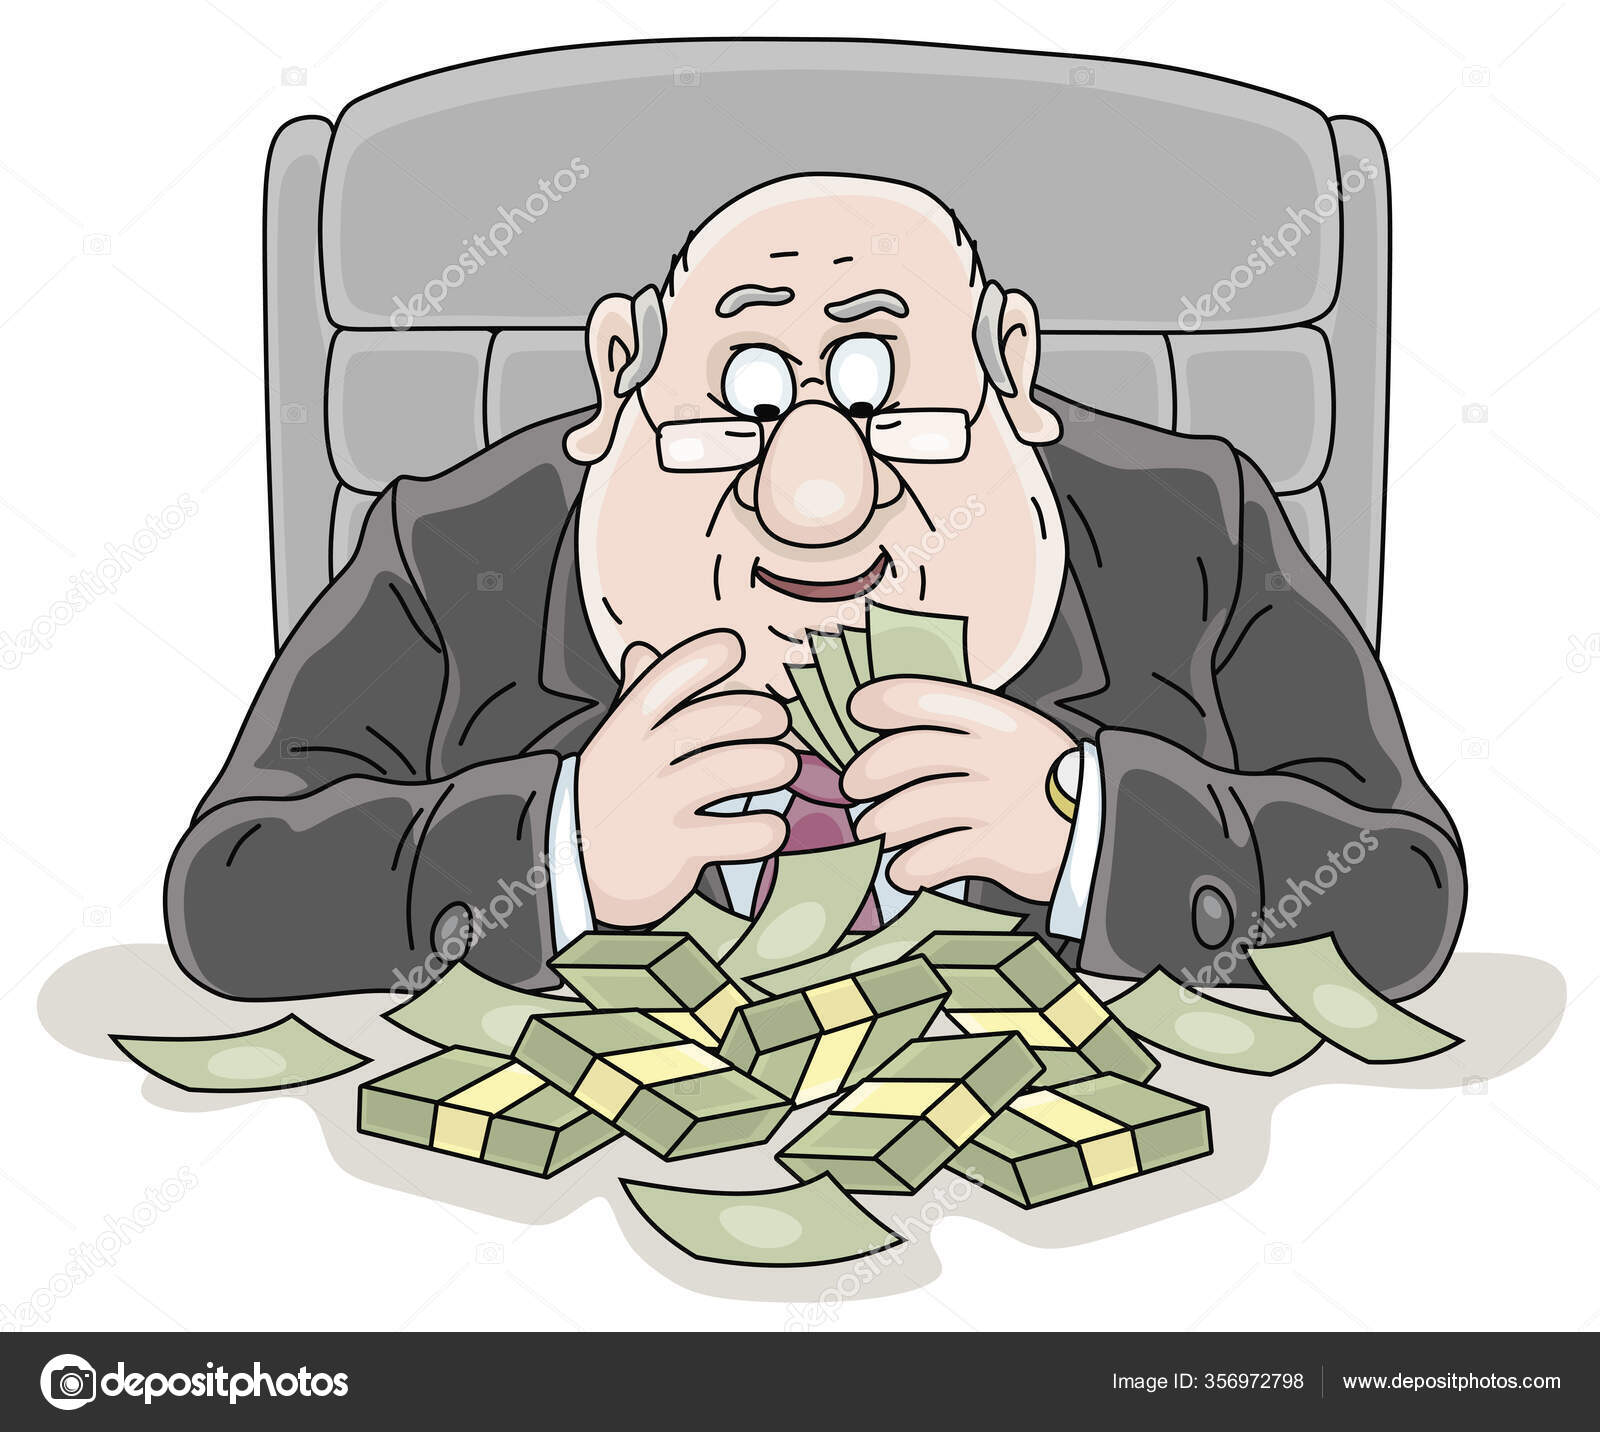 depositphotos_356972798-stock-illustration-joyful-fat-corrupt-official-sitting.jpg